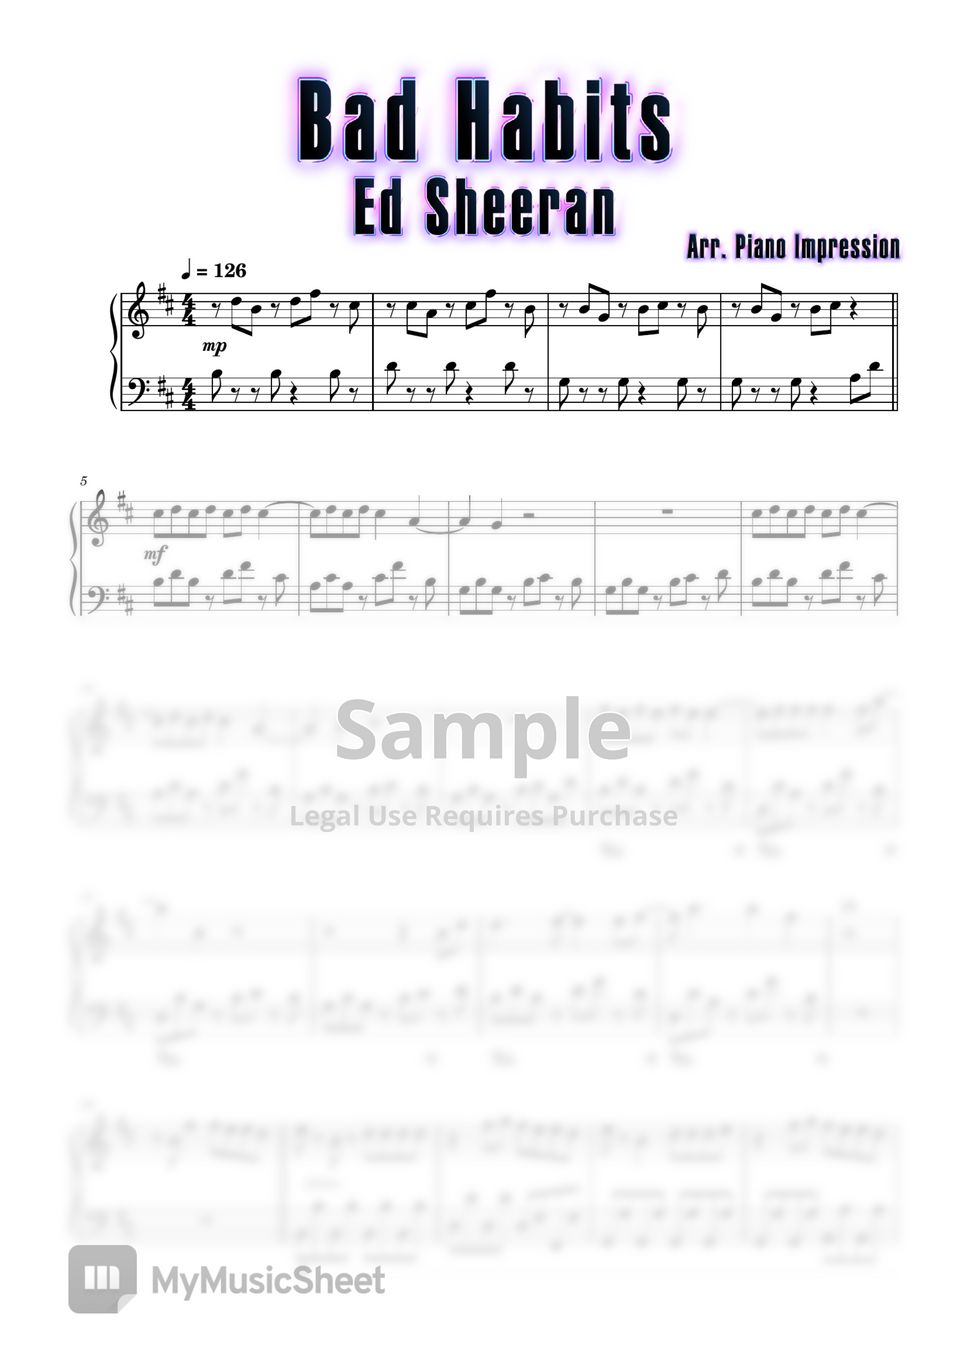 Ed Sheeran - Bad Habits by Piano Impression